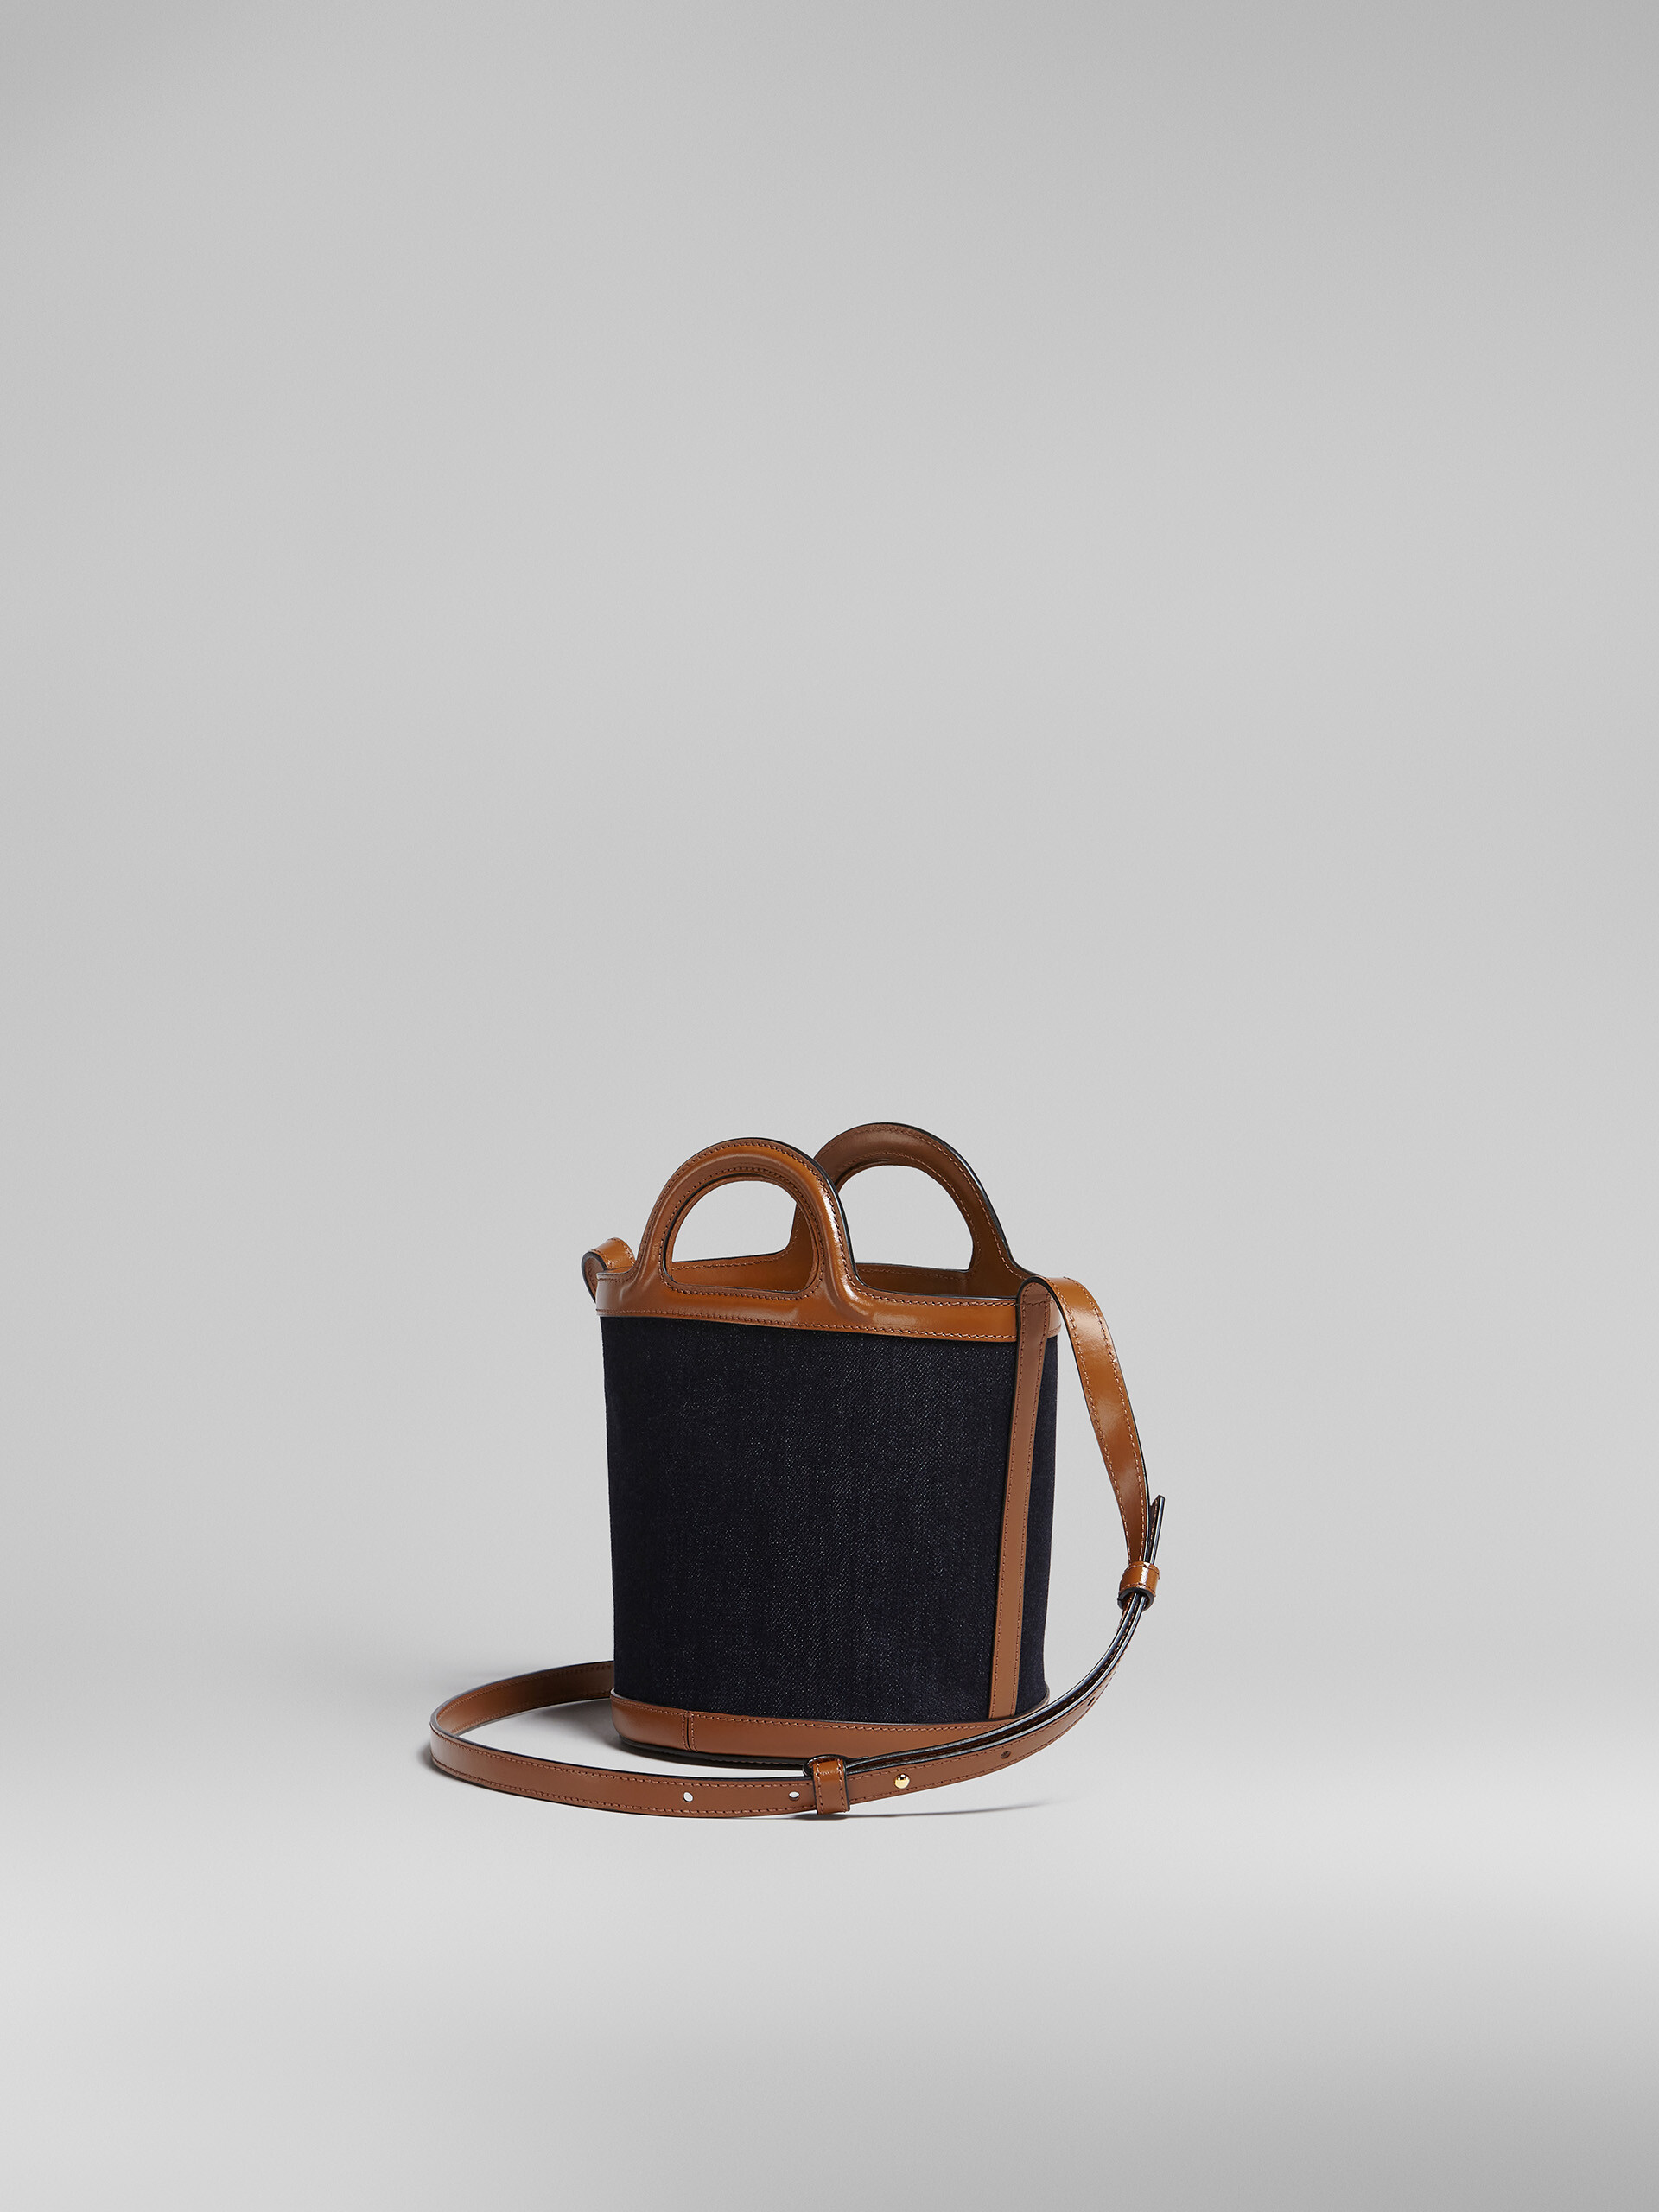 TROPICALIA mini bucket bag in denim and leather - Shoulder Bag - Image 3